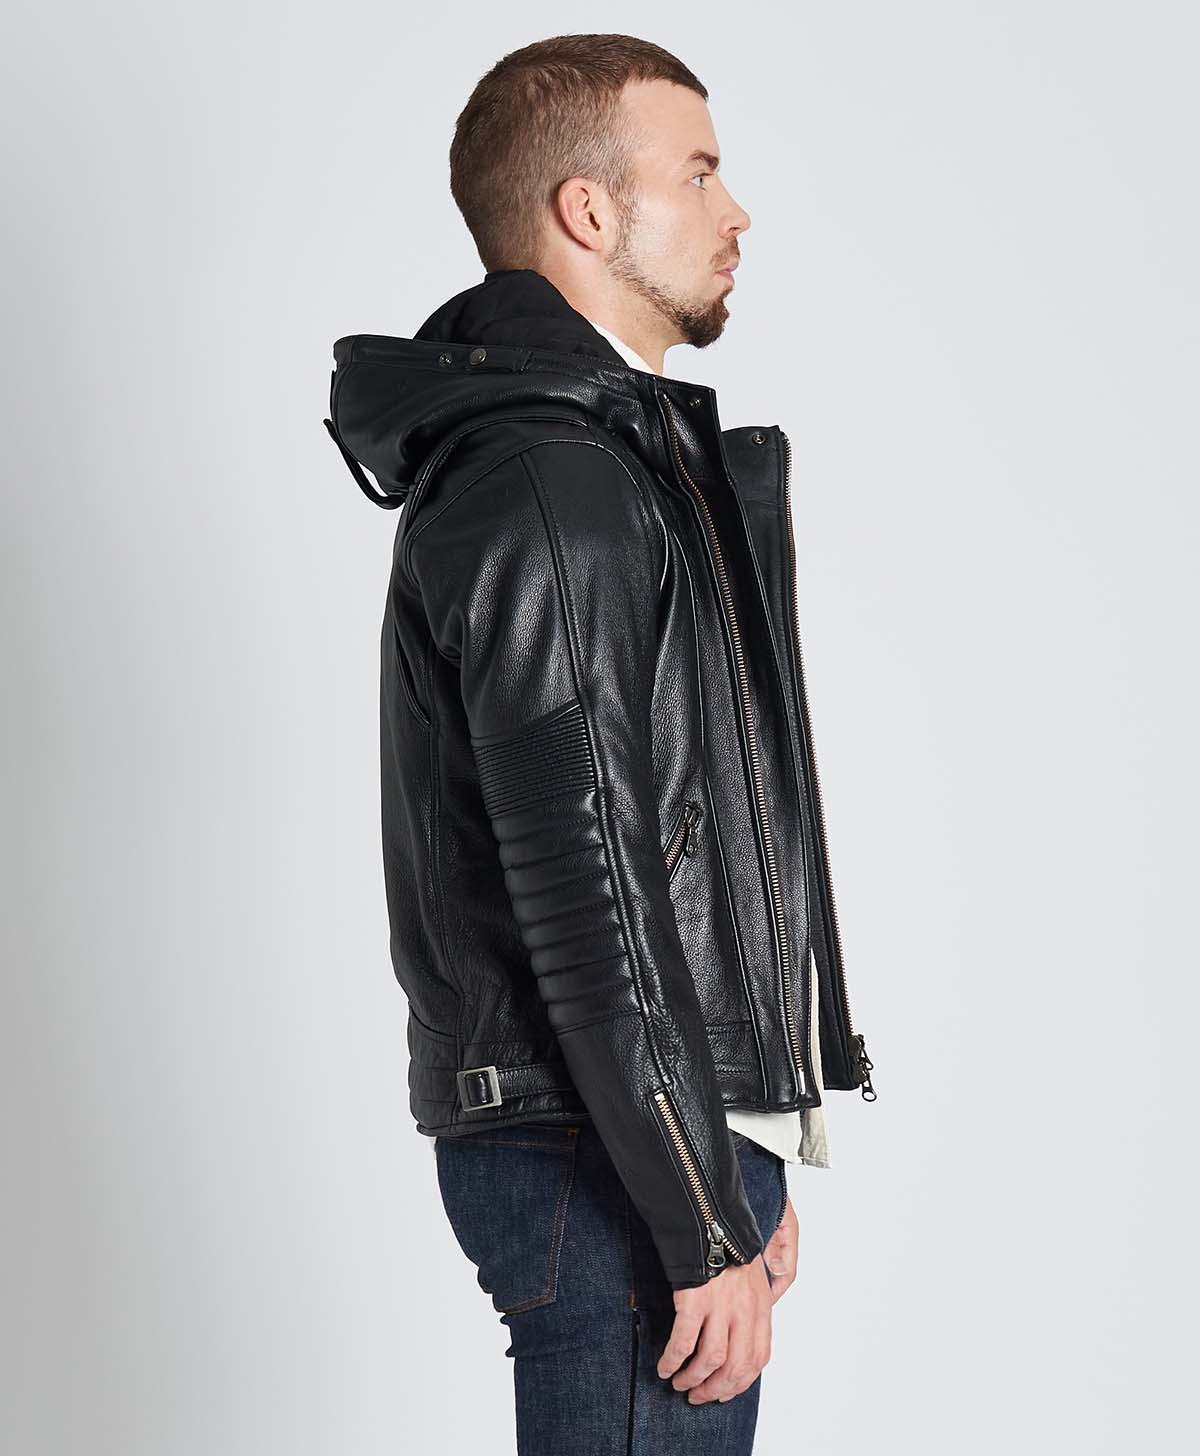 Leather jacket hooded leather jacket | Kadoya official online shop 